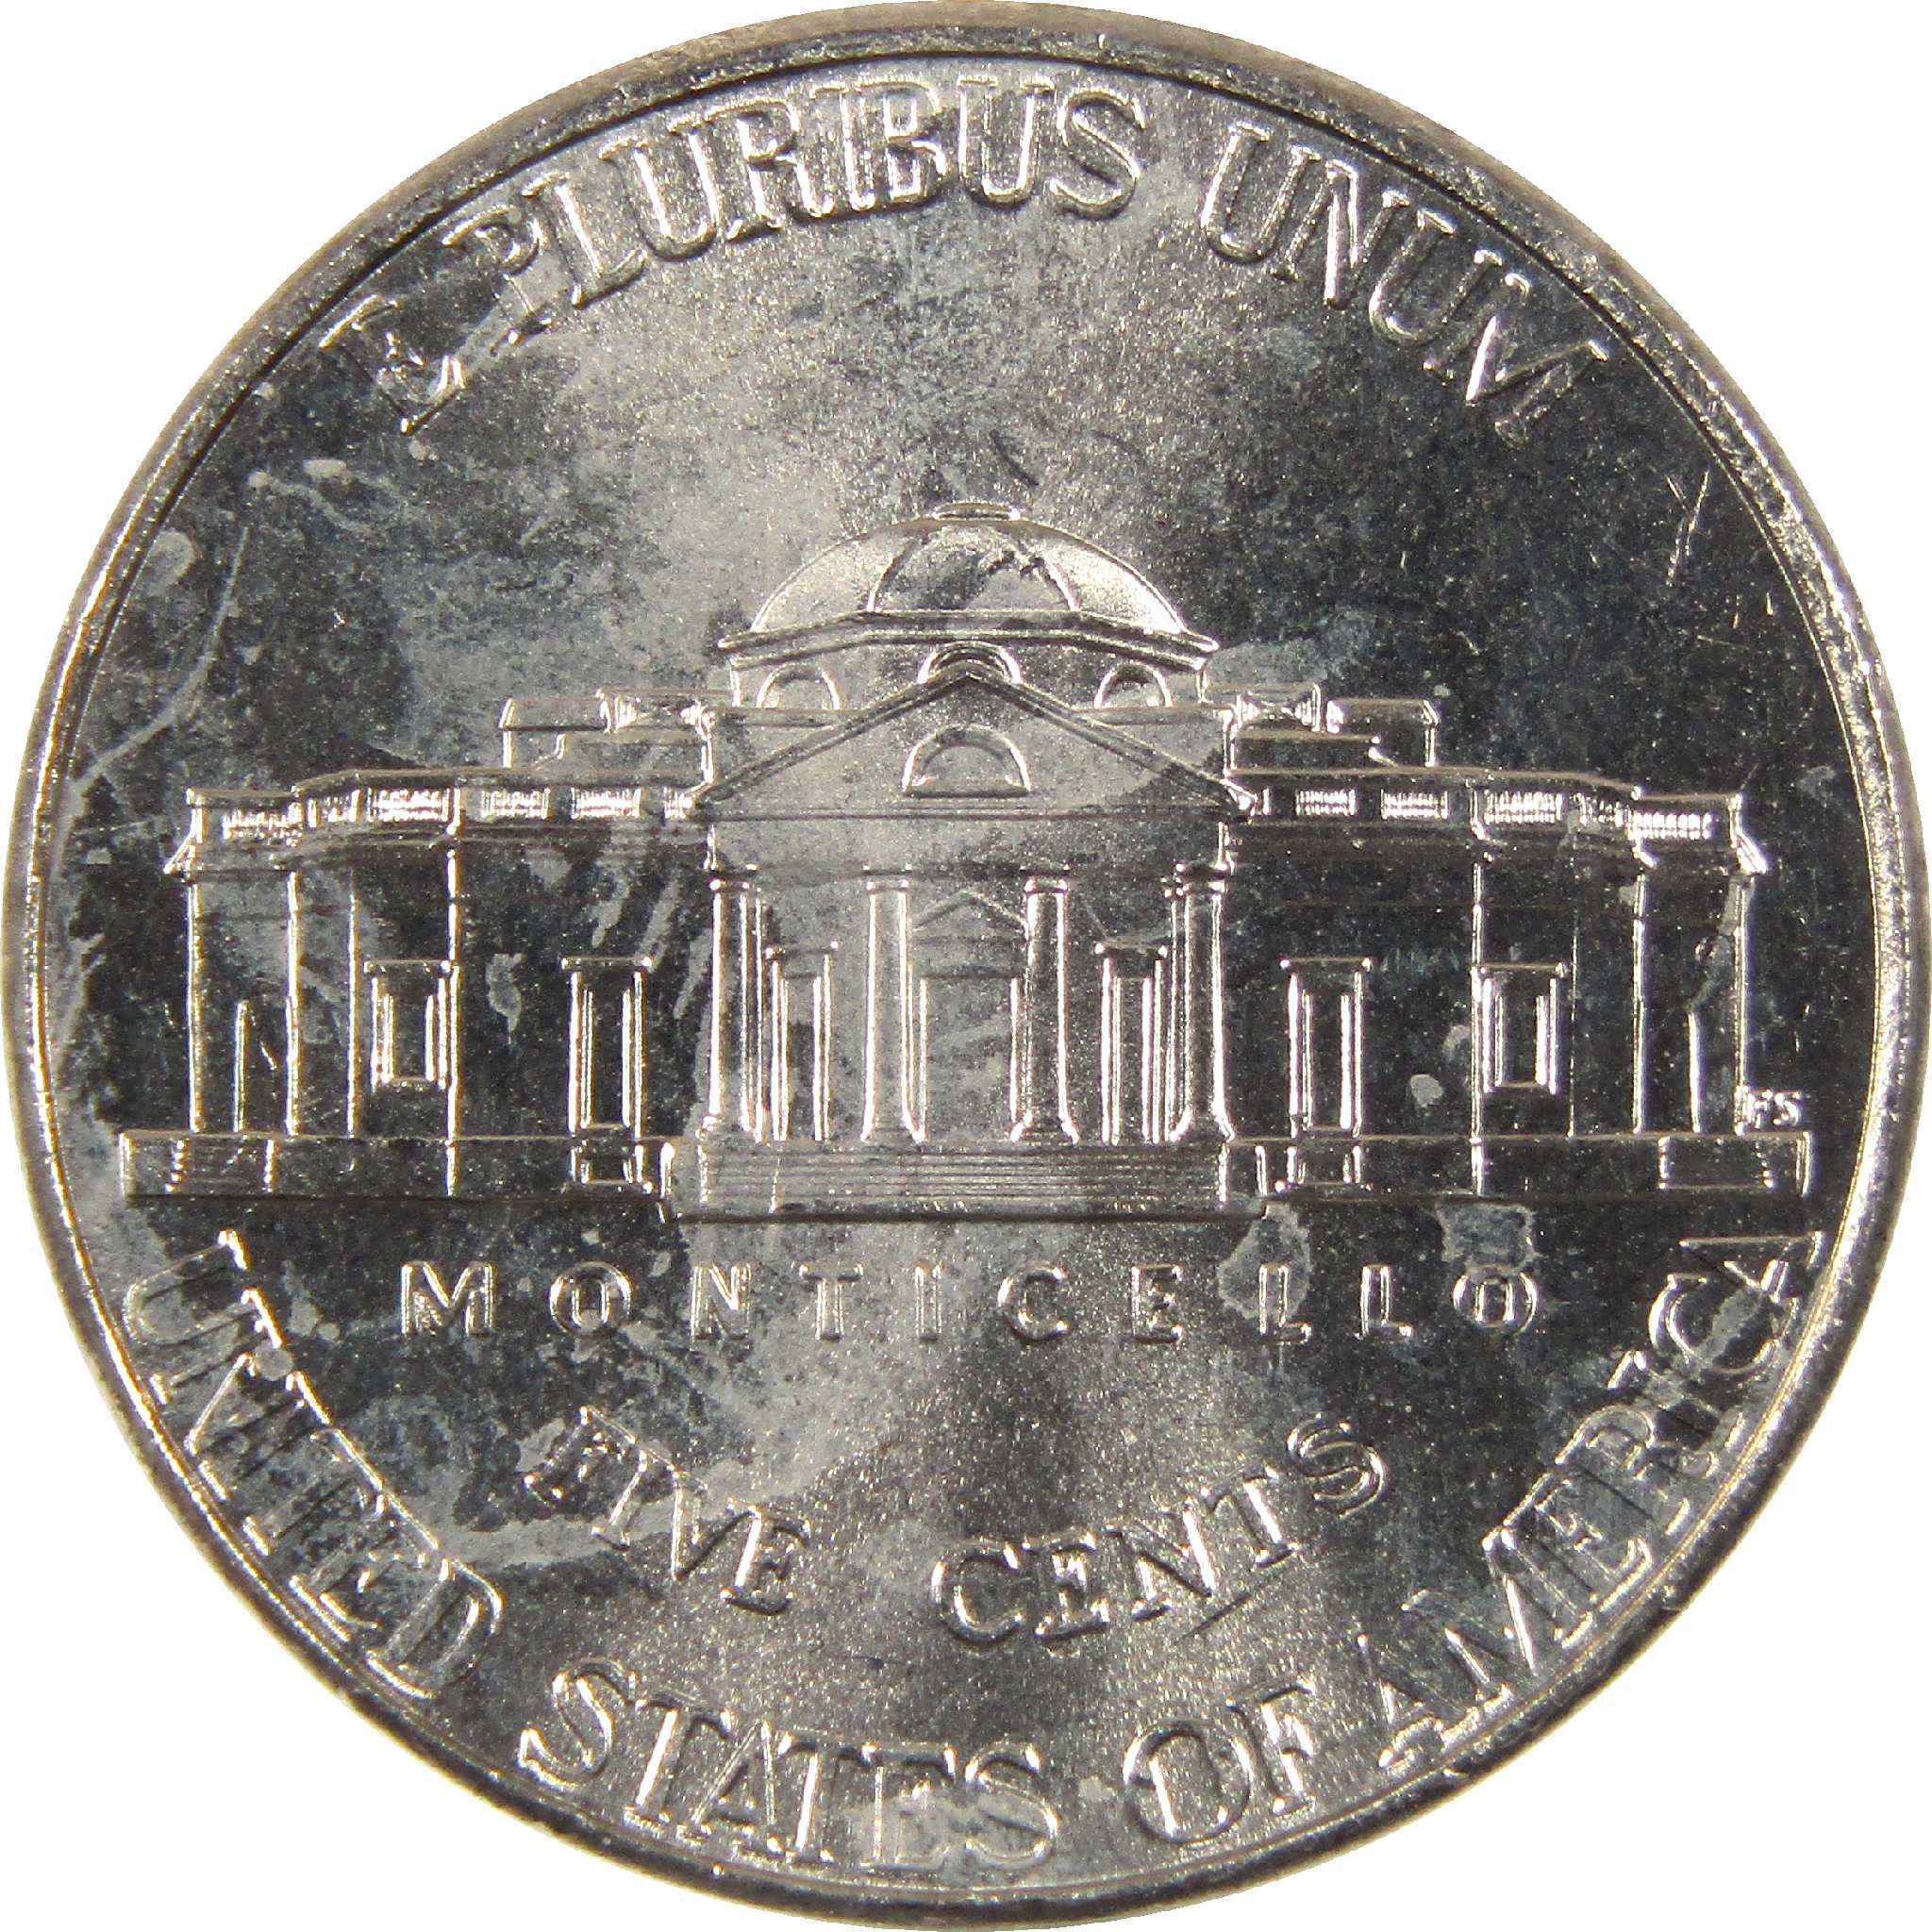 2018 P Jefferson Nickel BU Uncirculated 5c Coin